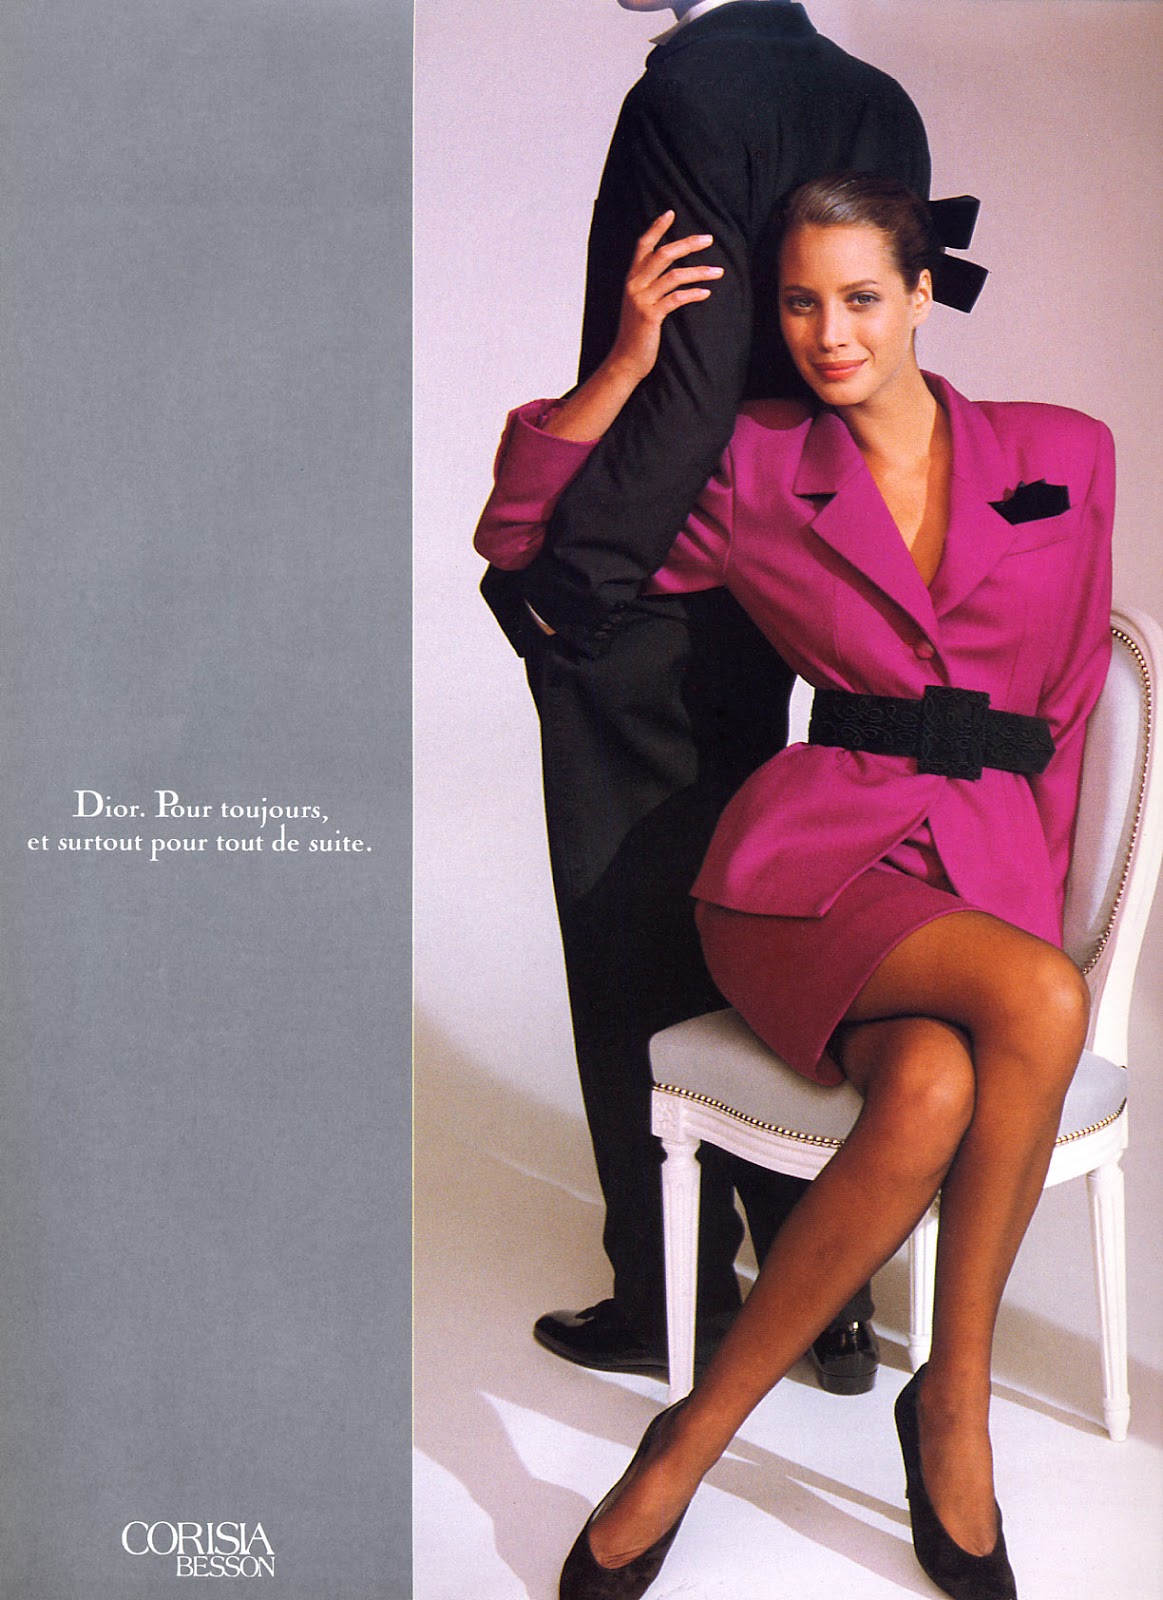 http://1.bp.blogspot.com/-OSwmwtwK4KY/T2tzhPvFKXI/AAAAAAAAFw4/FH5jaje1nHg/s1600/Christy+Turlington+1987+Christian+Dior+Boutique+01.jpg